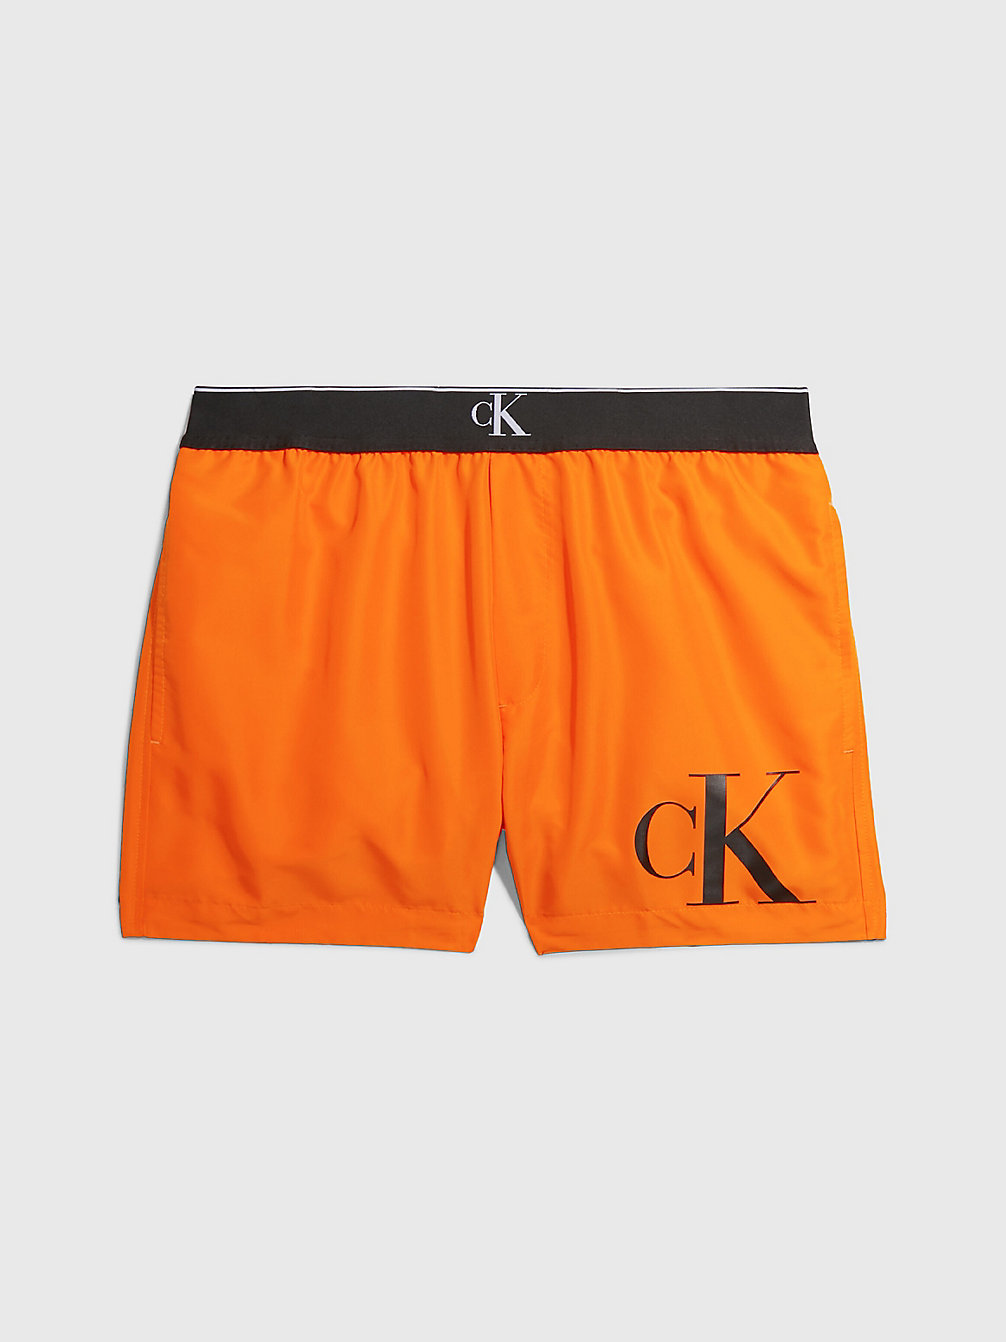 SUN KISSED ORANGE Swim Shorts - CK Monogram undefined men Calvin Klein